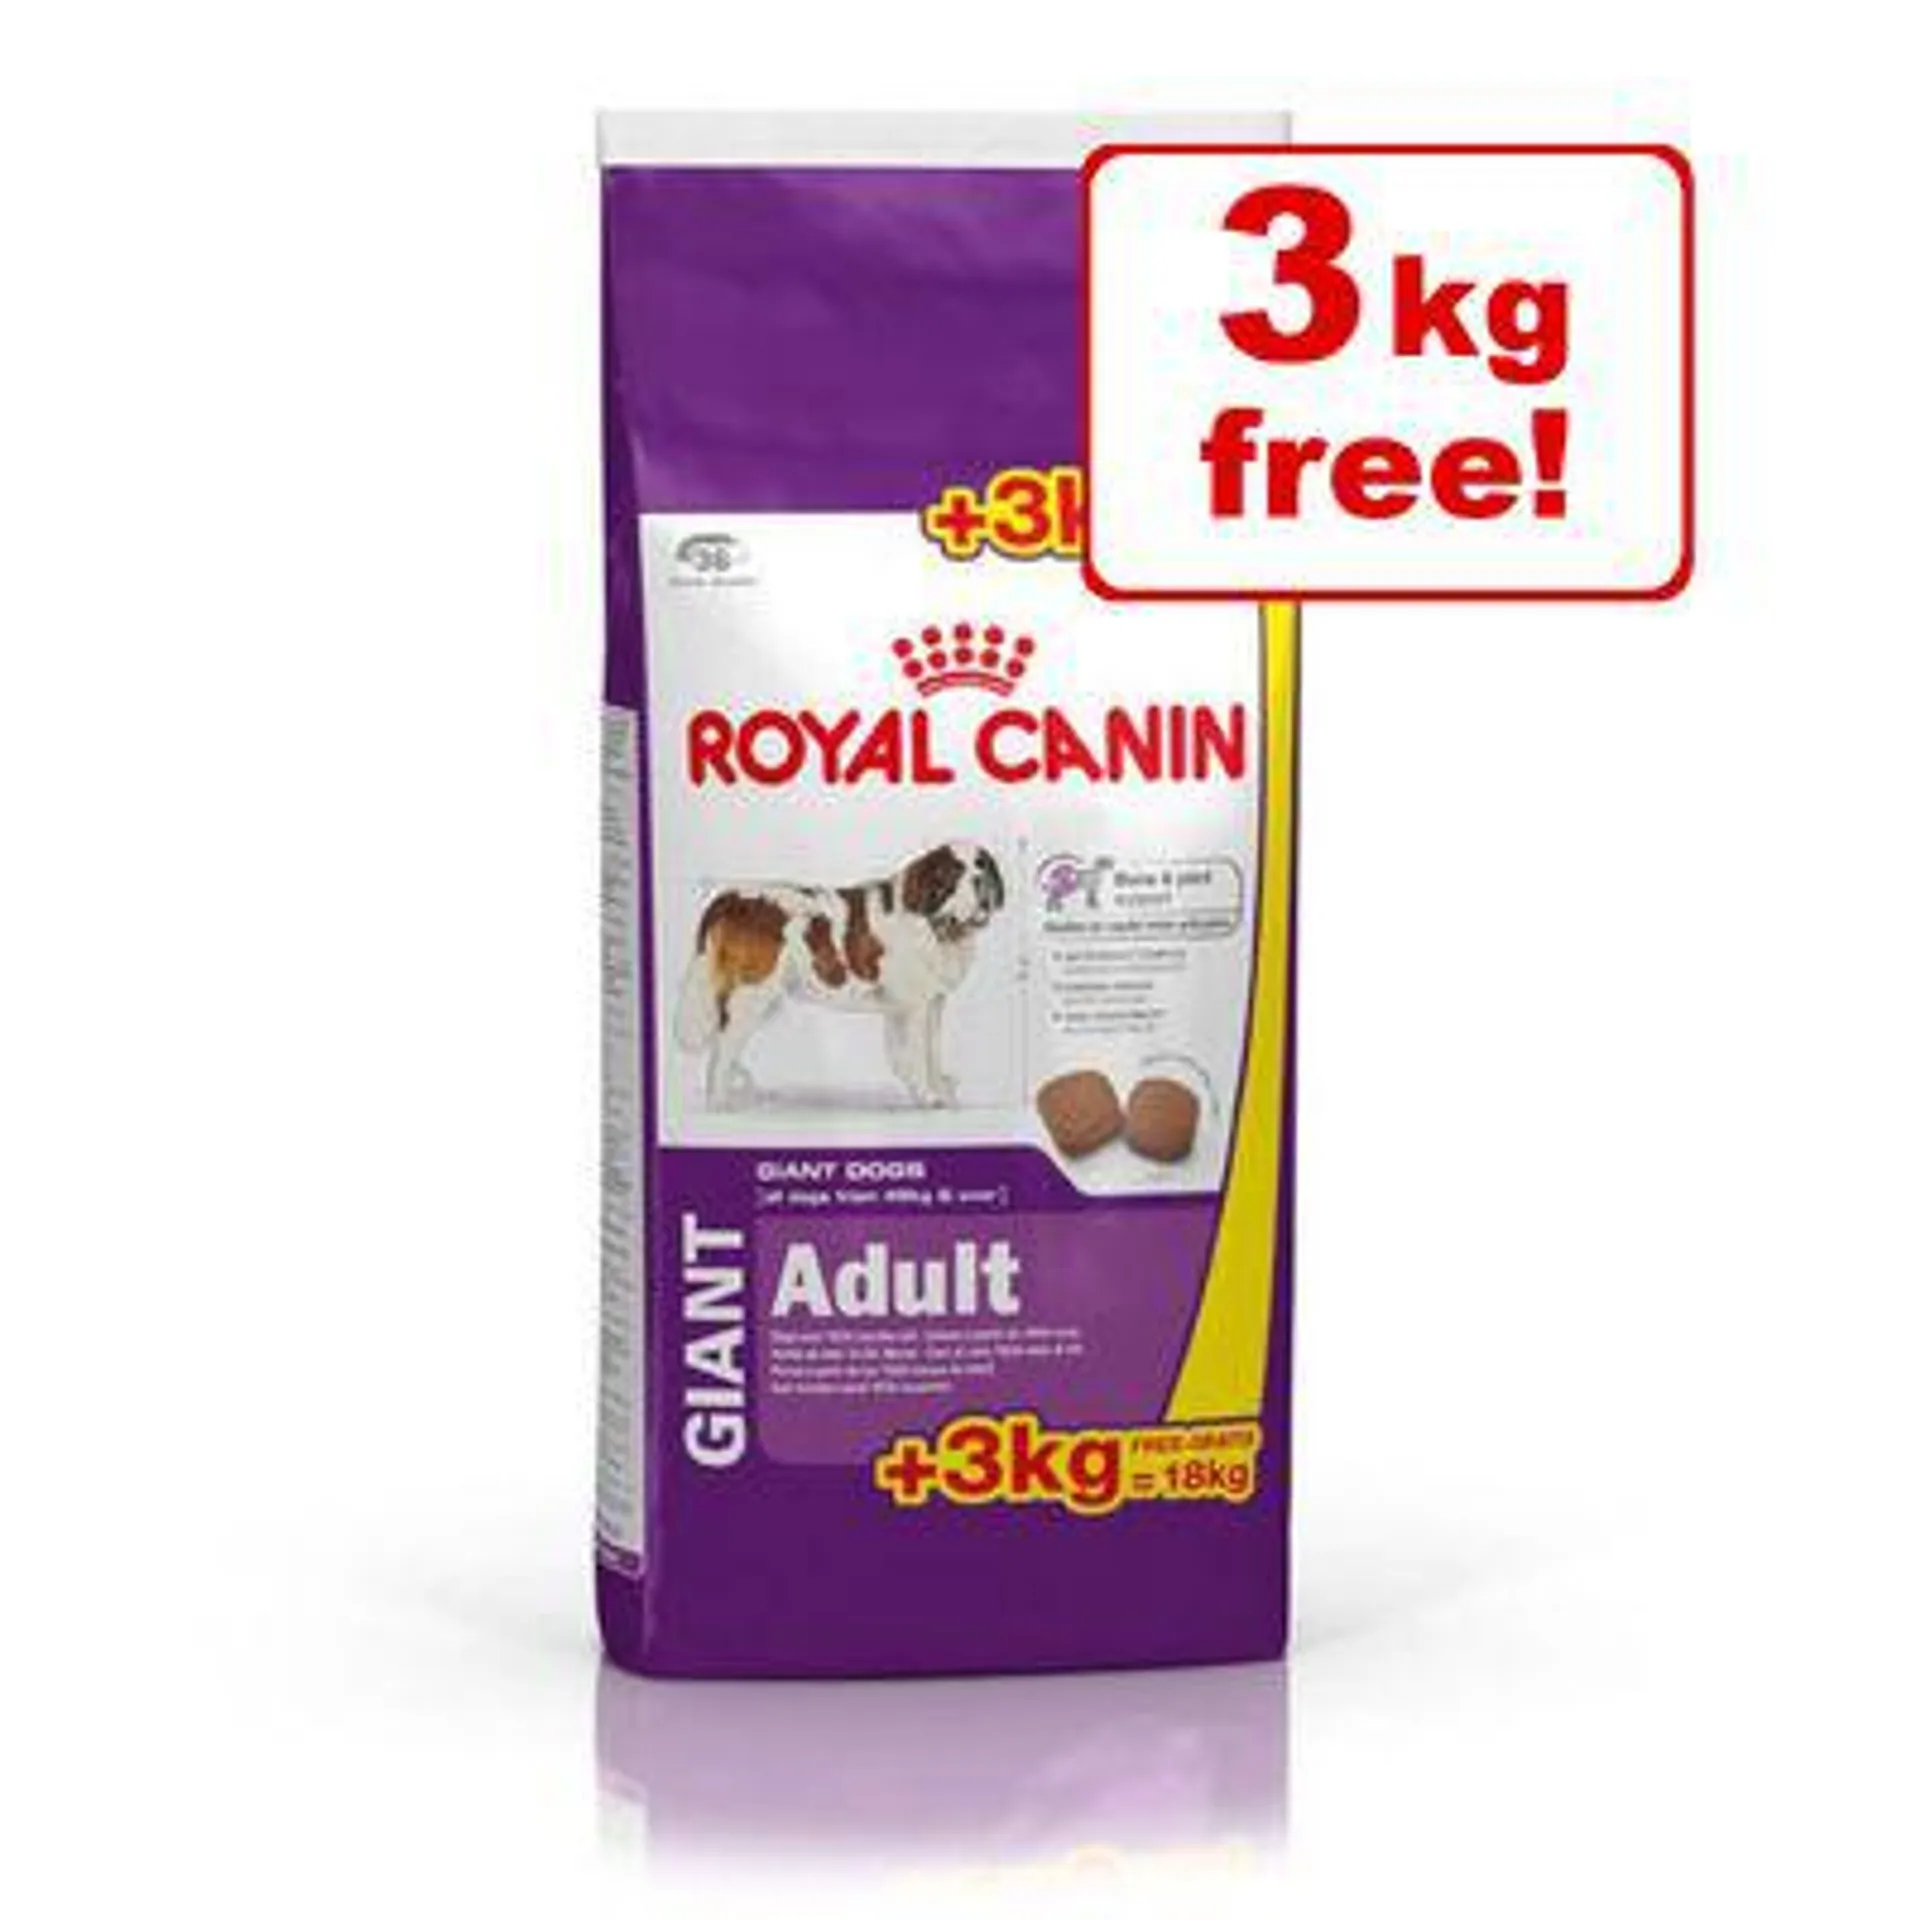 15kg Royal Canin Size Dry Dog Food + 3kg Free!*